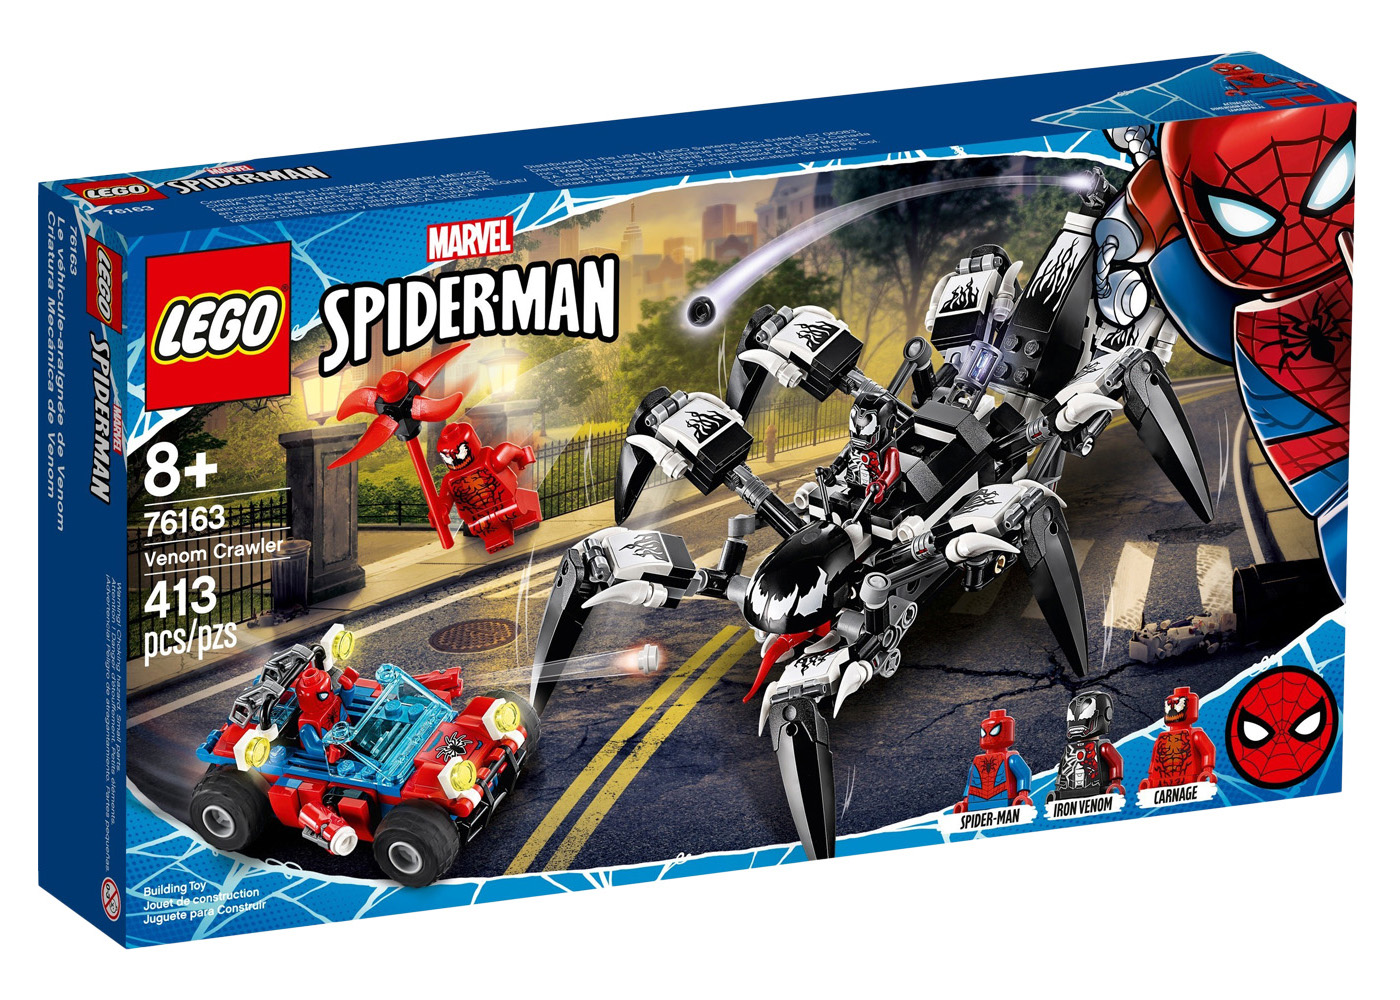 LEGO Marvel Super Heroes Venom Crawler Set 76163 - GB